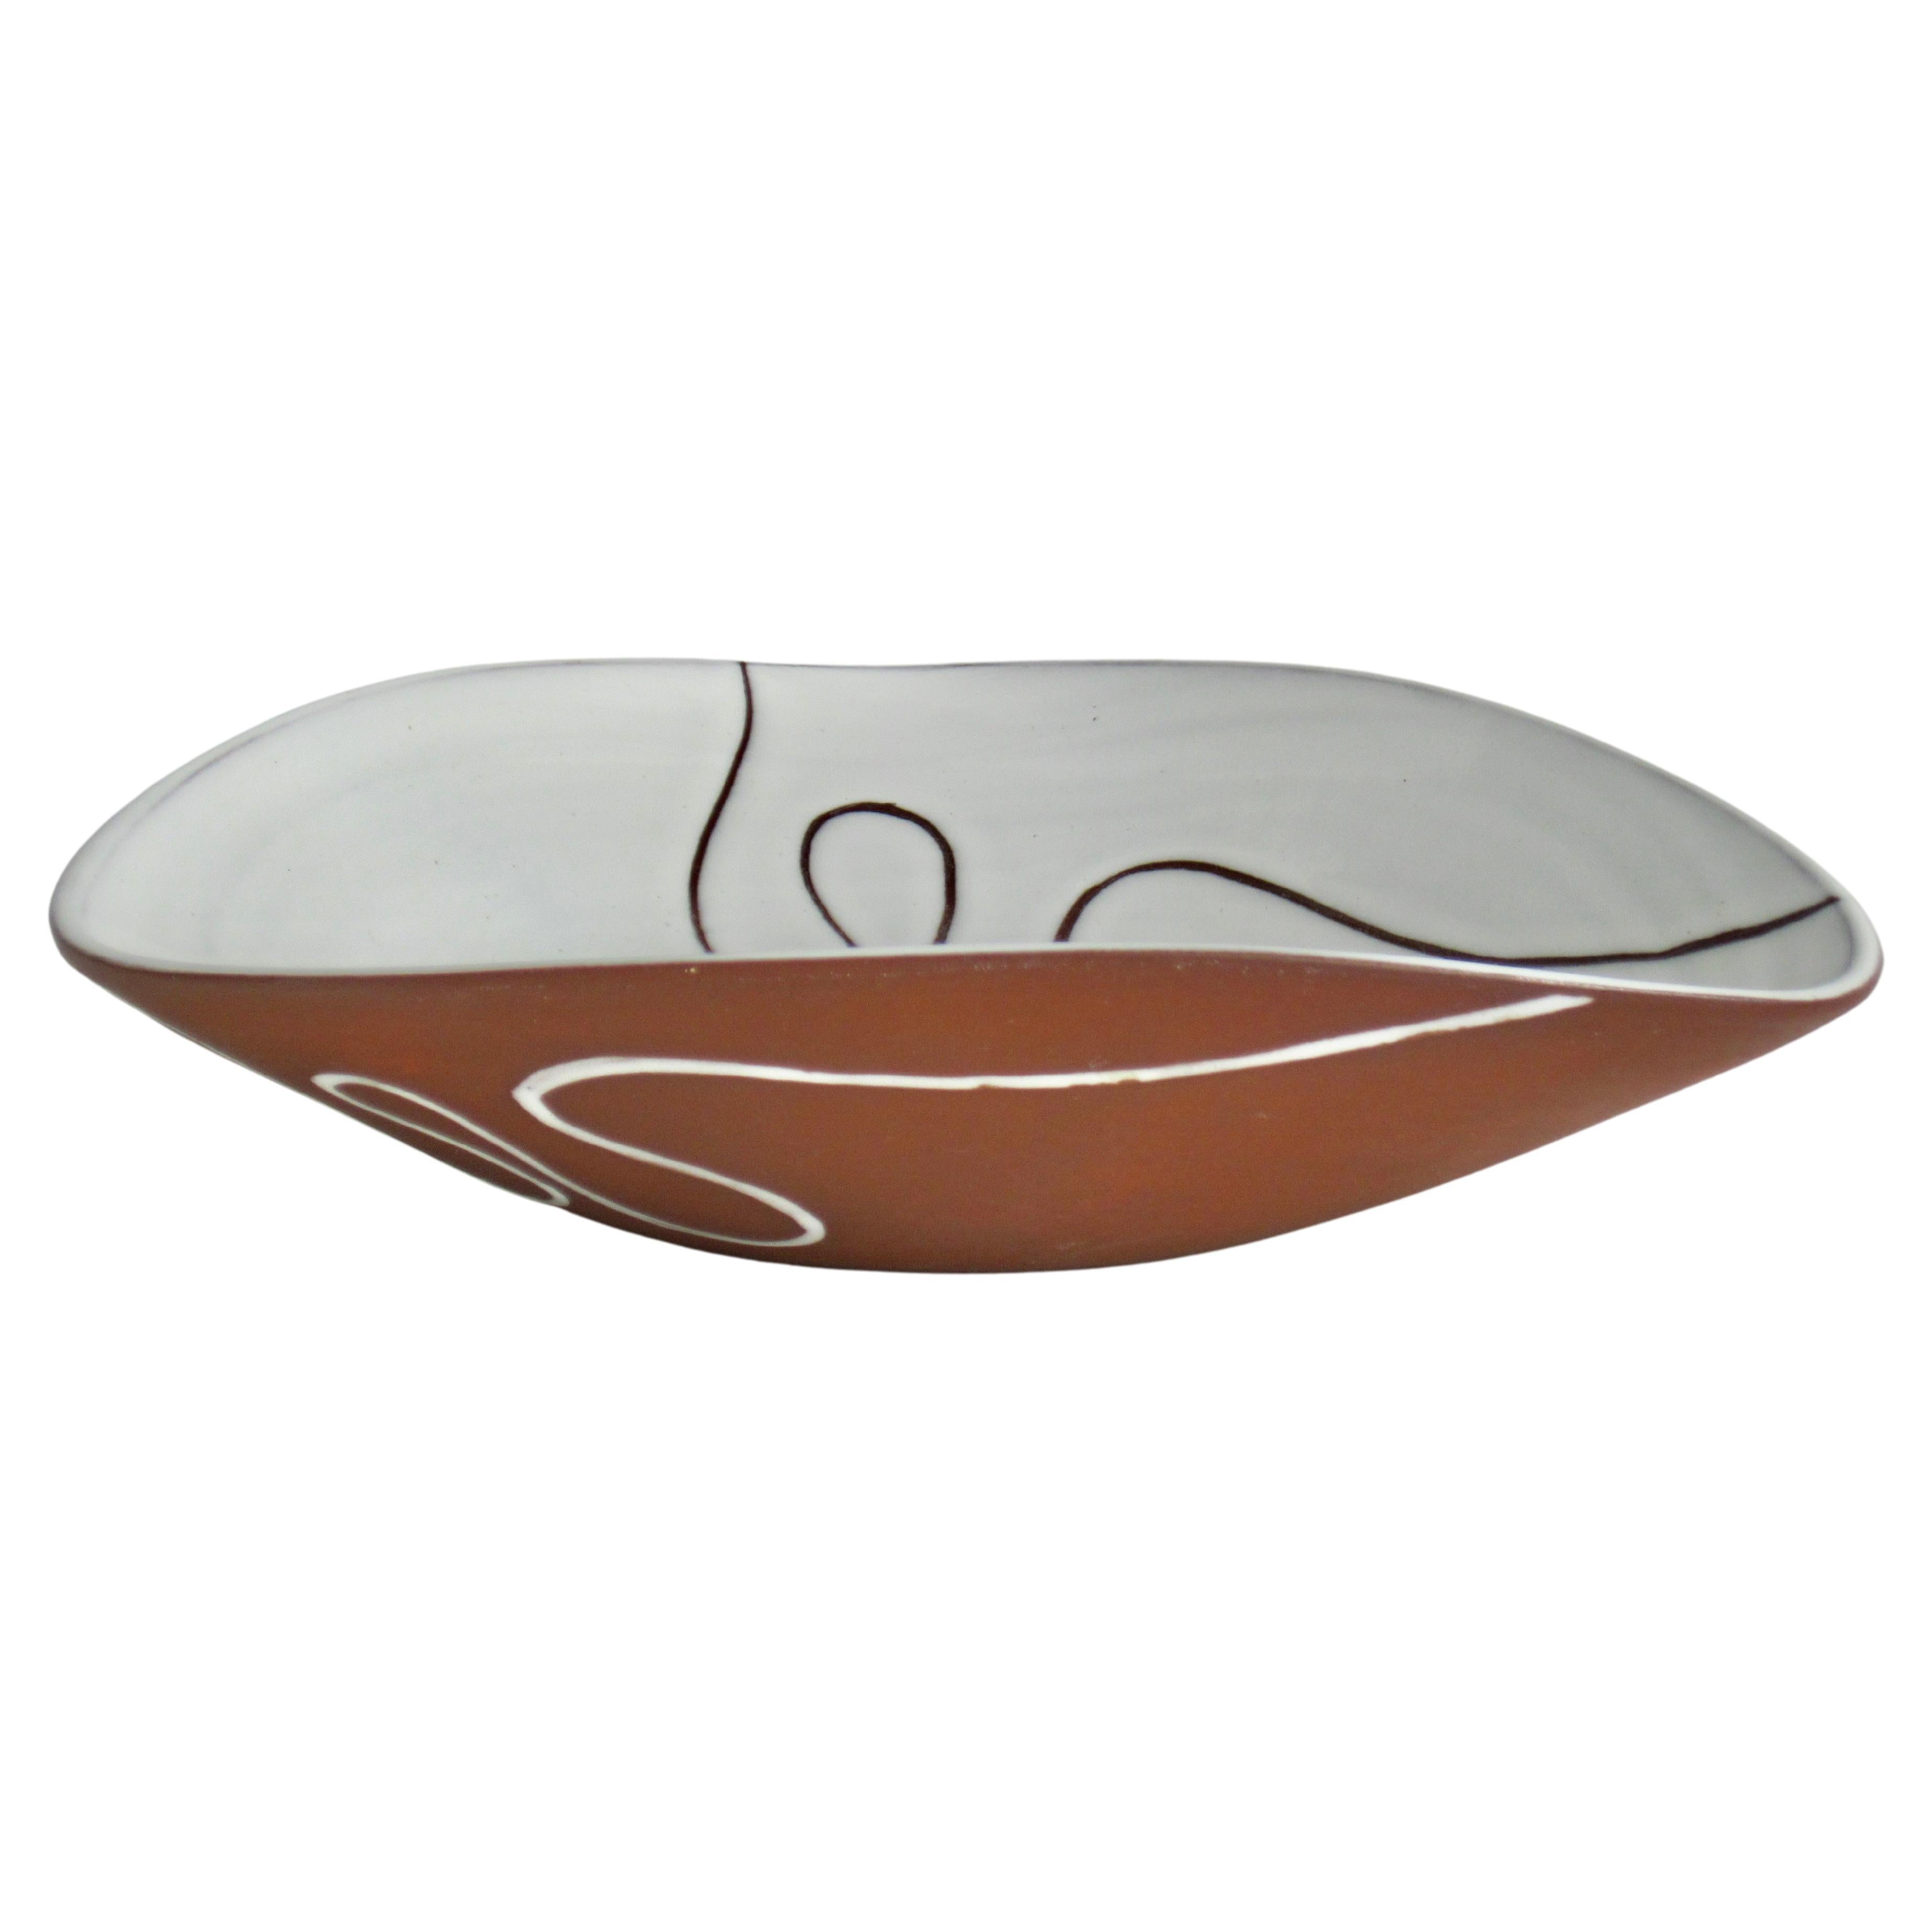 Haemstede Holland Minimalist Ceramic Bowl